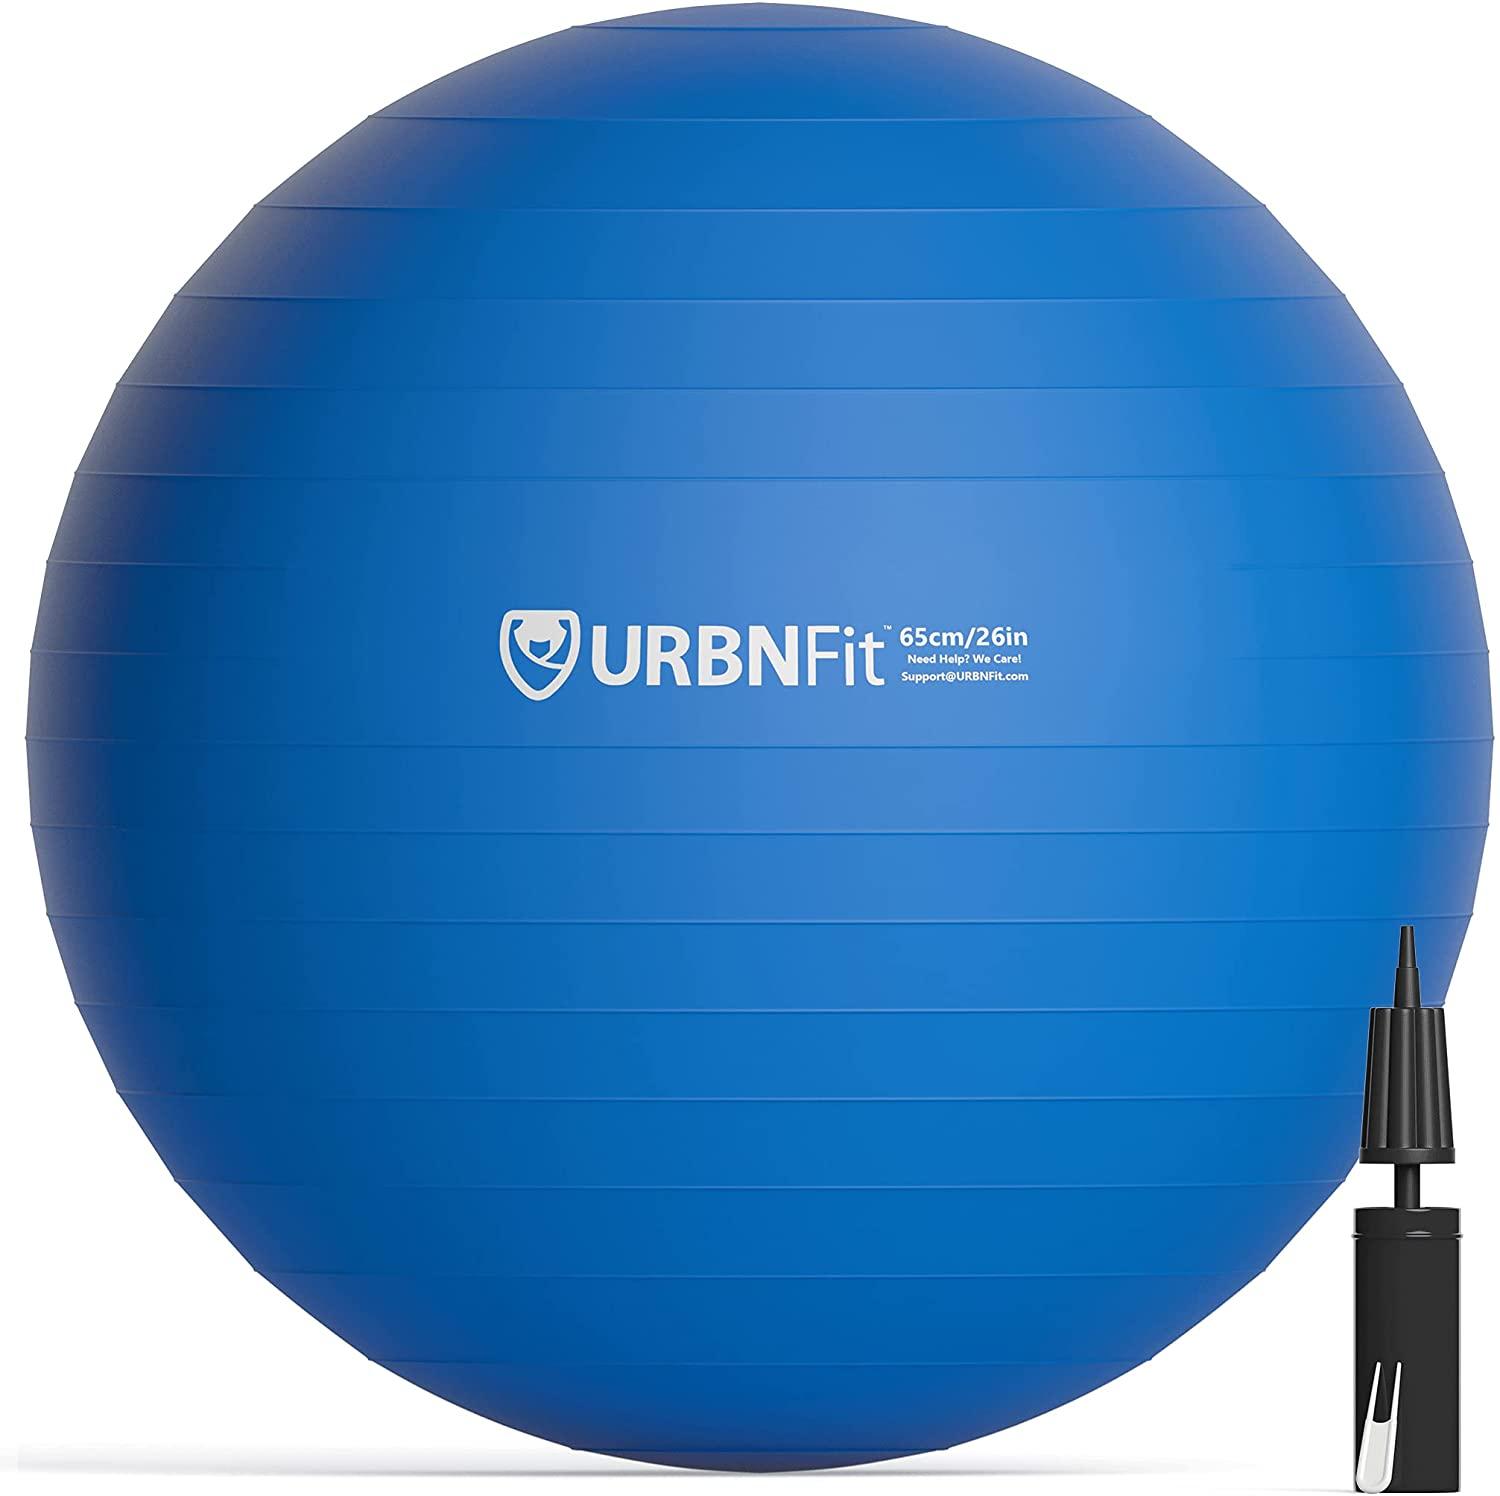 URBNFit Exercise Ball for $11.50